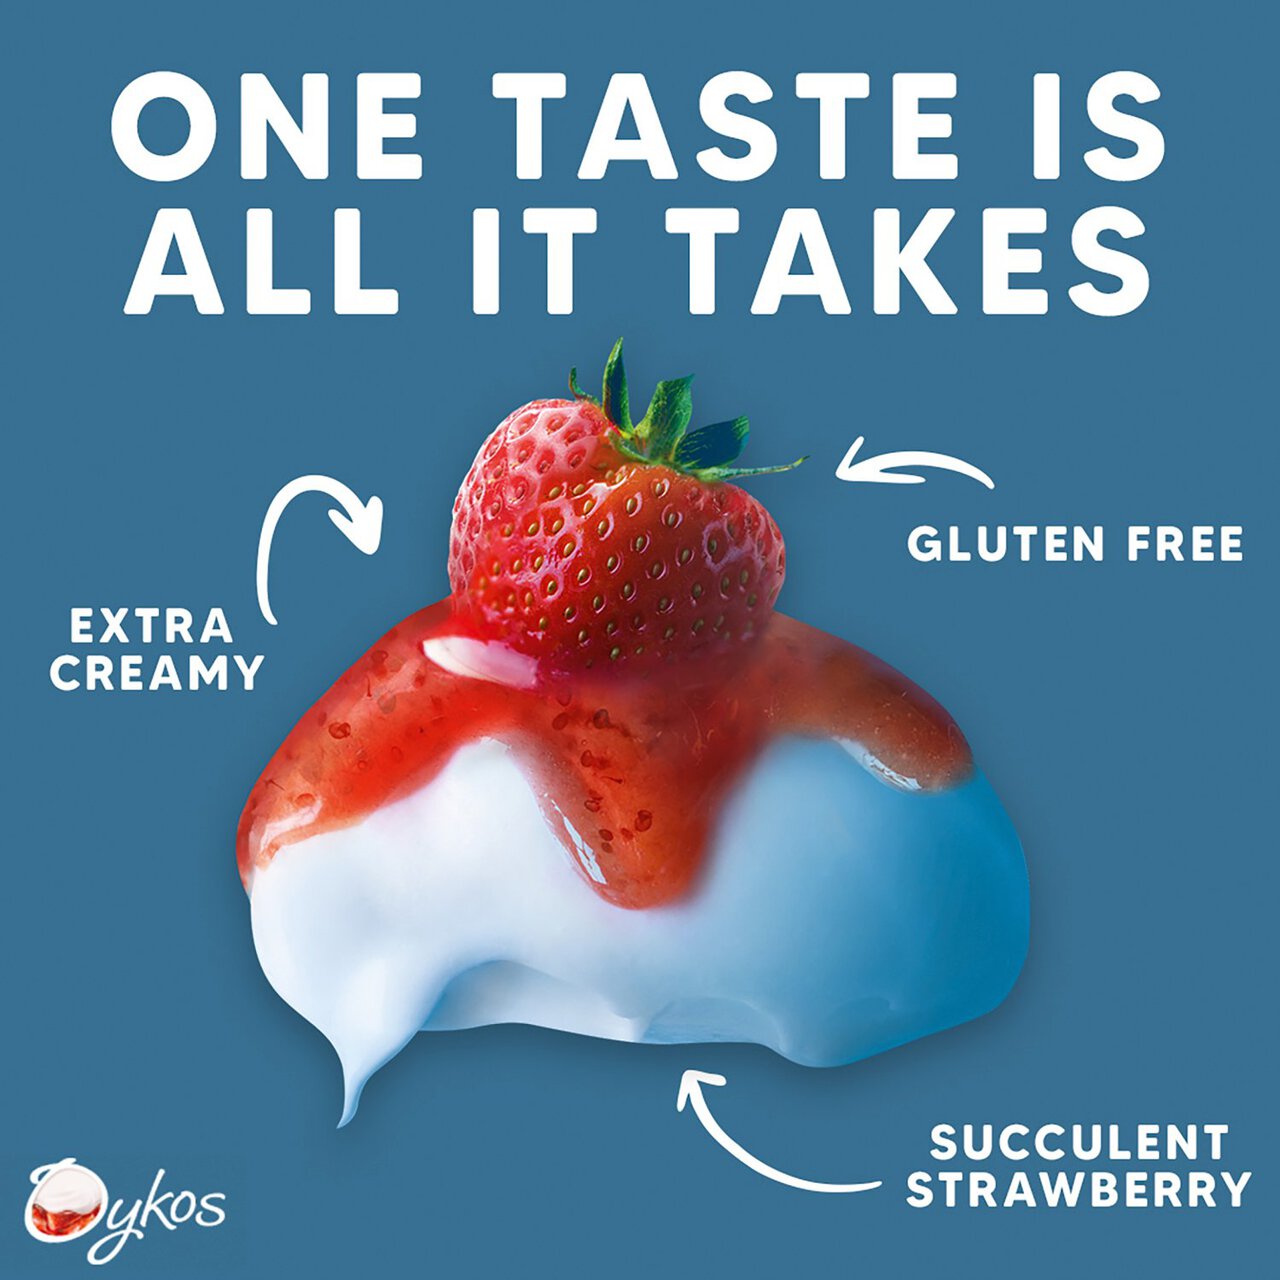 Oykos Strawberry Luxury Greek Style Yoghurt 4 x 110g